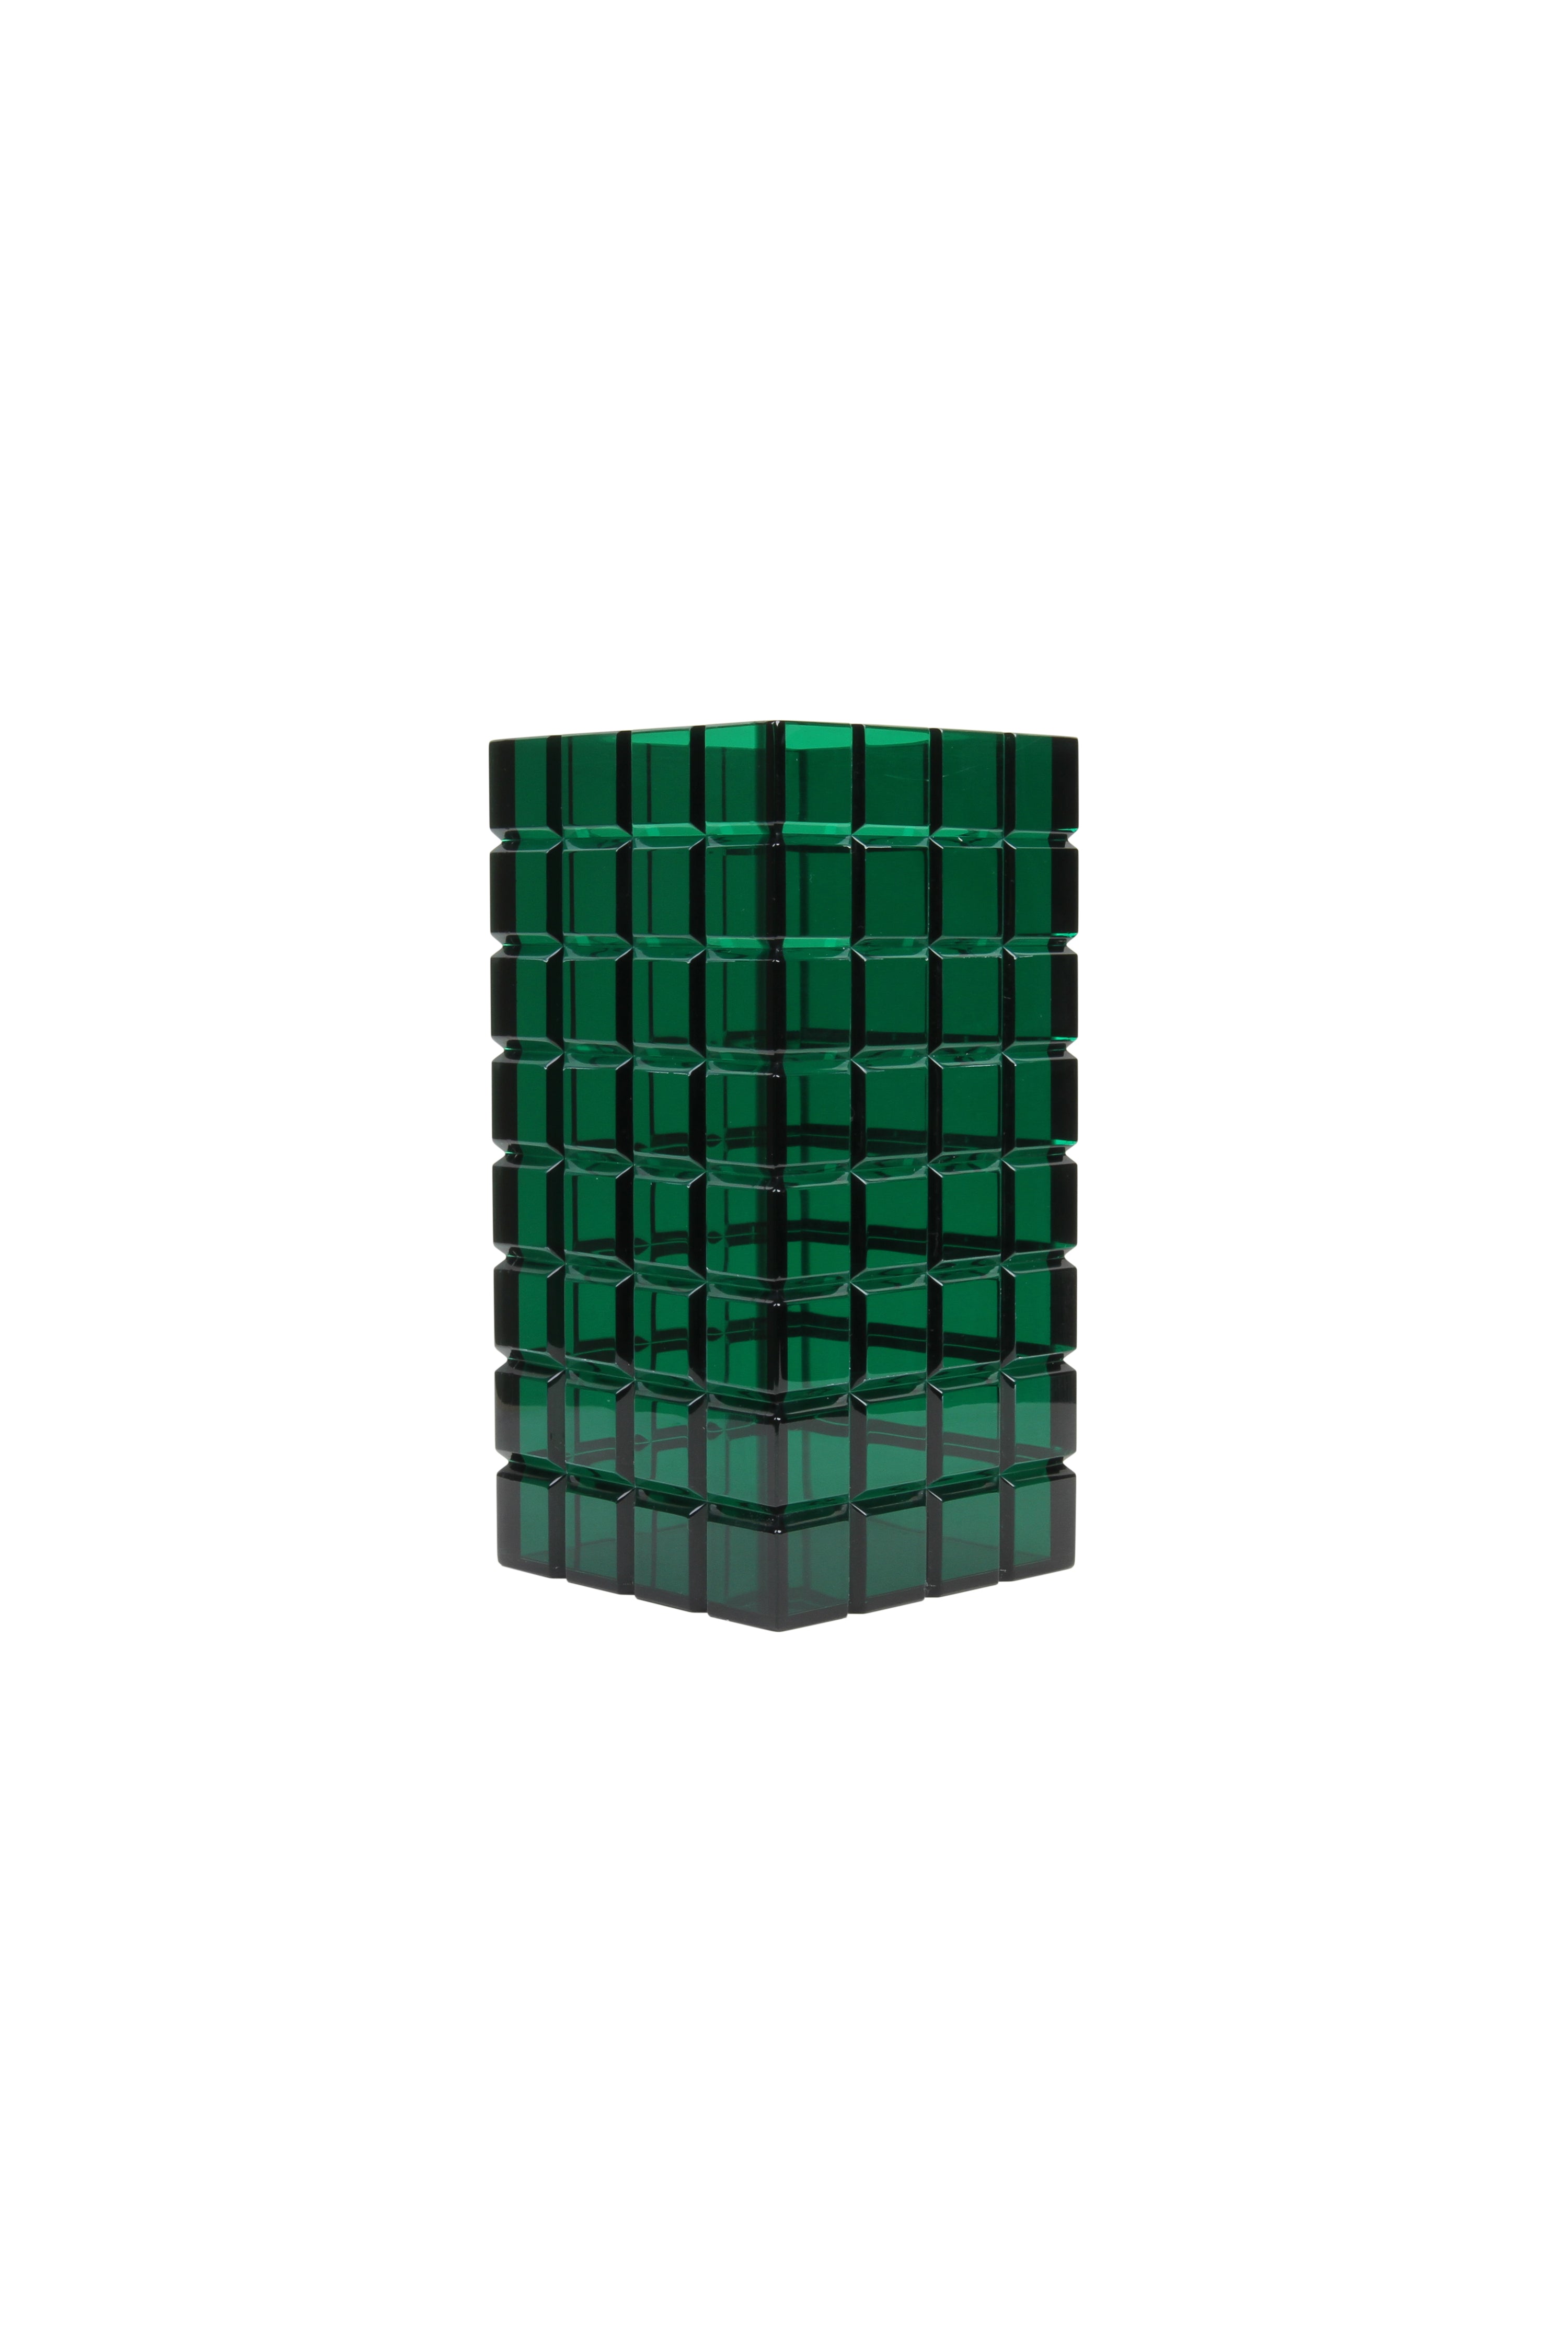 The LOU LOU vase in Green